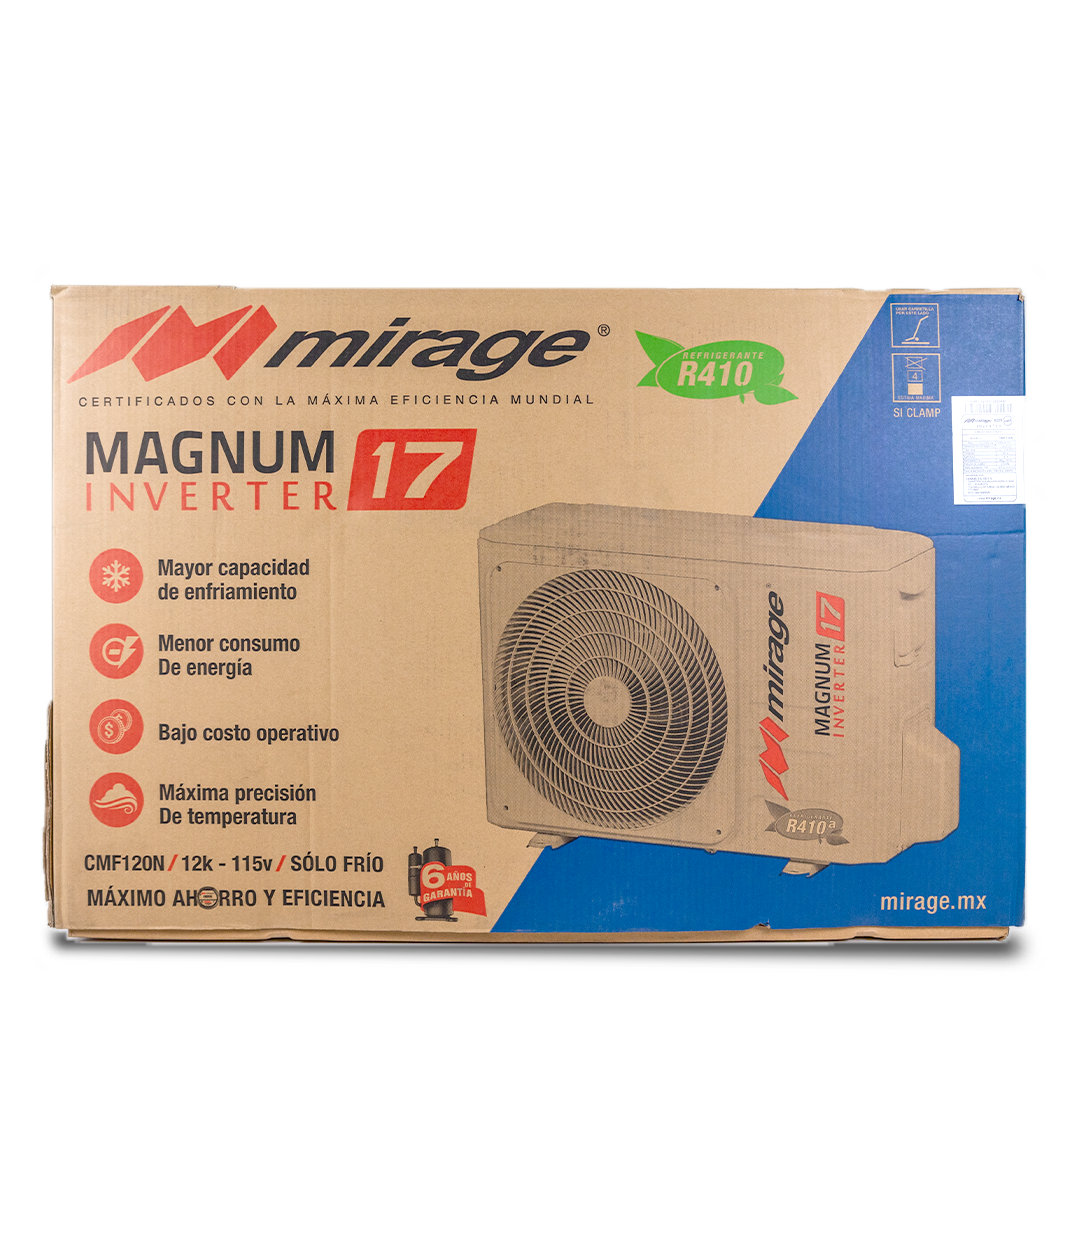 Magnum 17 1 Tonelada a 110v